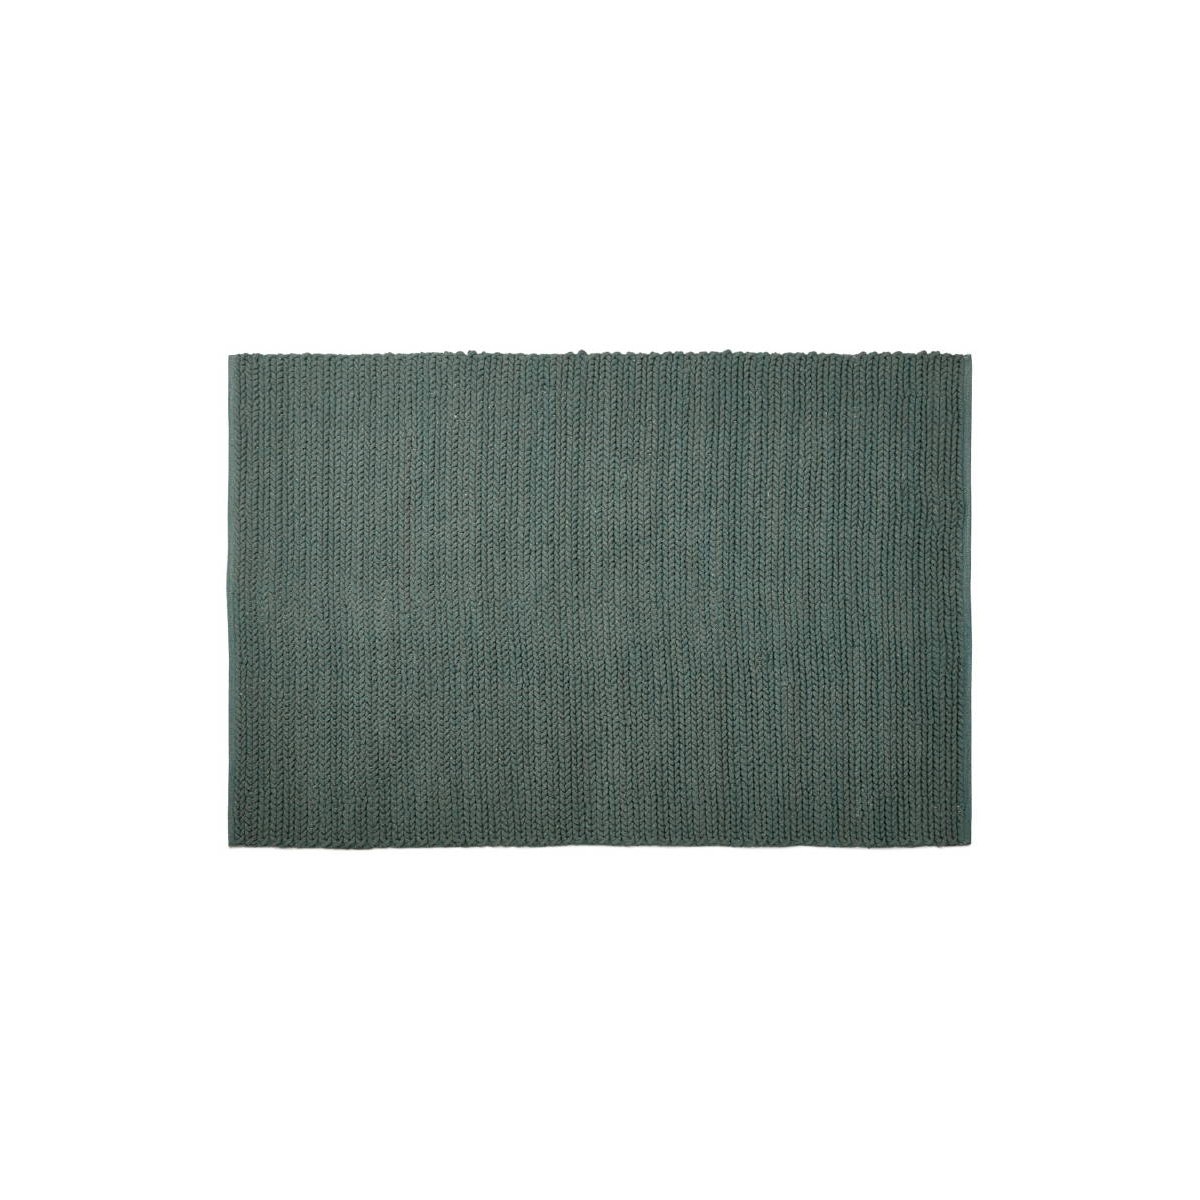 Carpet design rectangular (230 cm X 160 cm) knit cotton (green